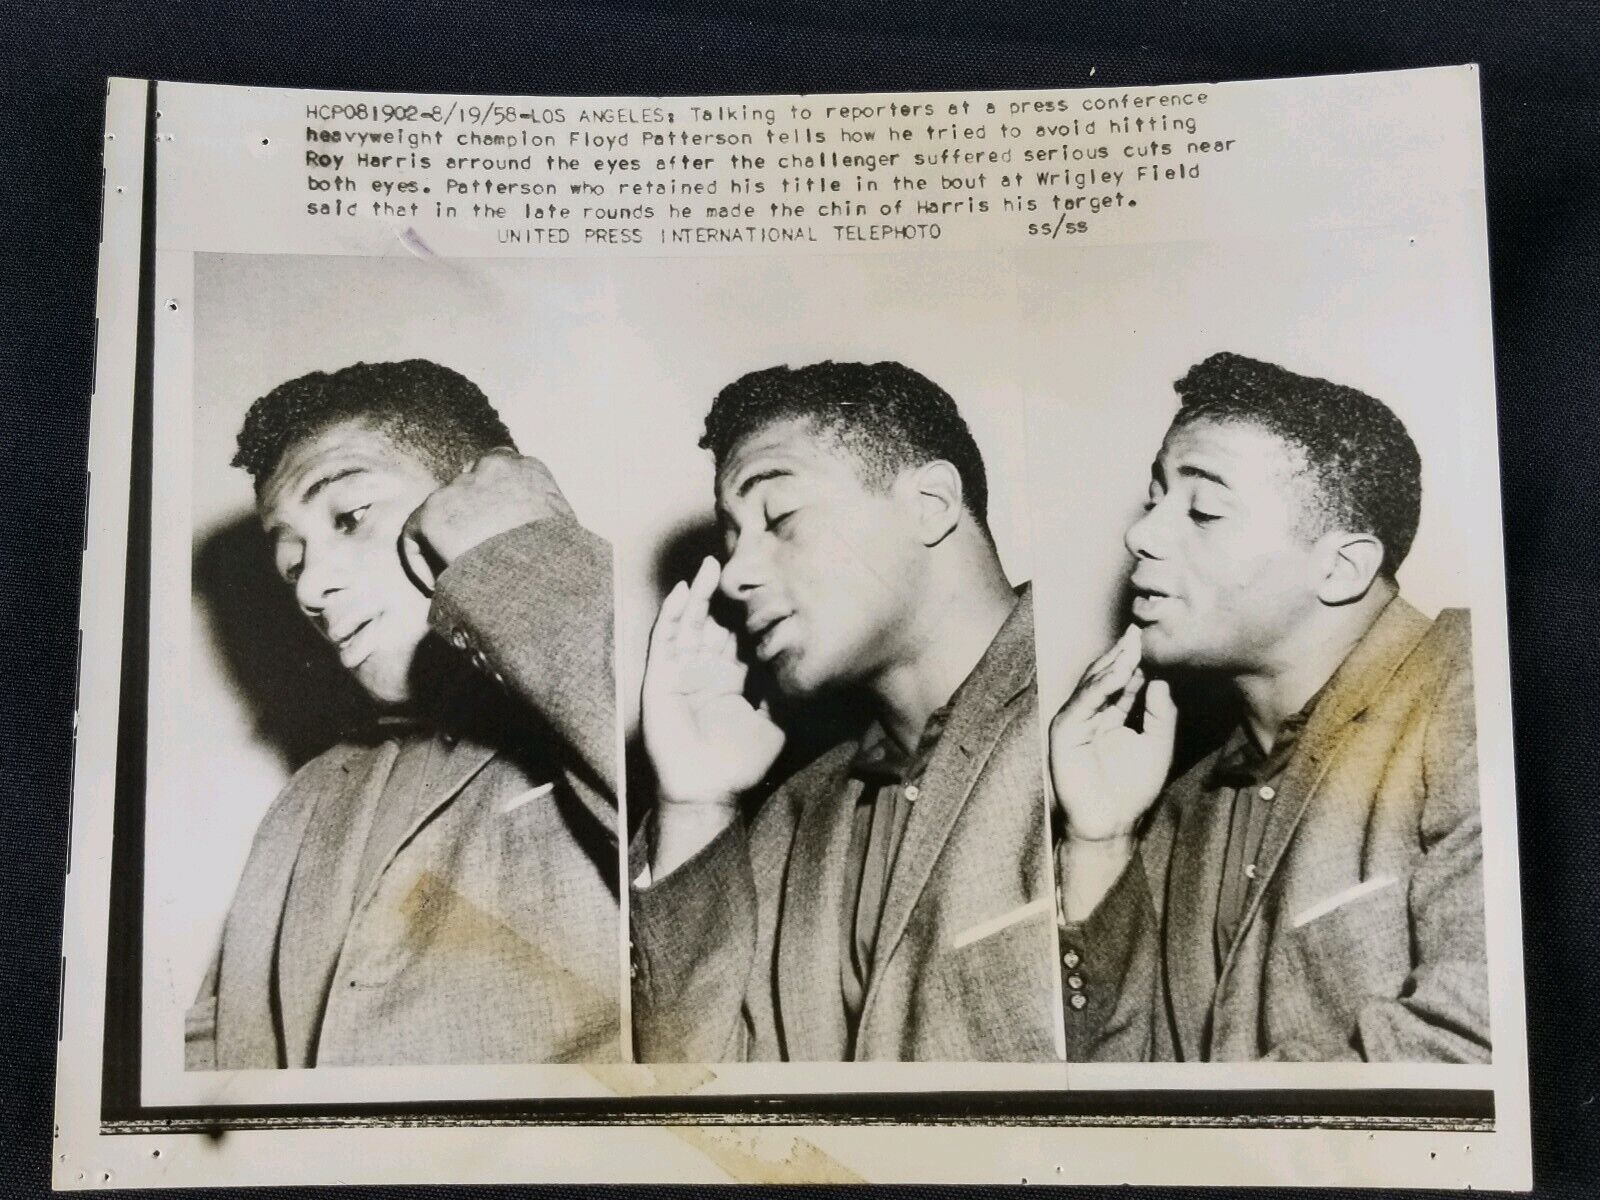 Vtg 1958 Boxing Press Photo Floyd Patterson Talking Reporters Roy Harris Fight